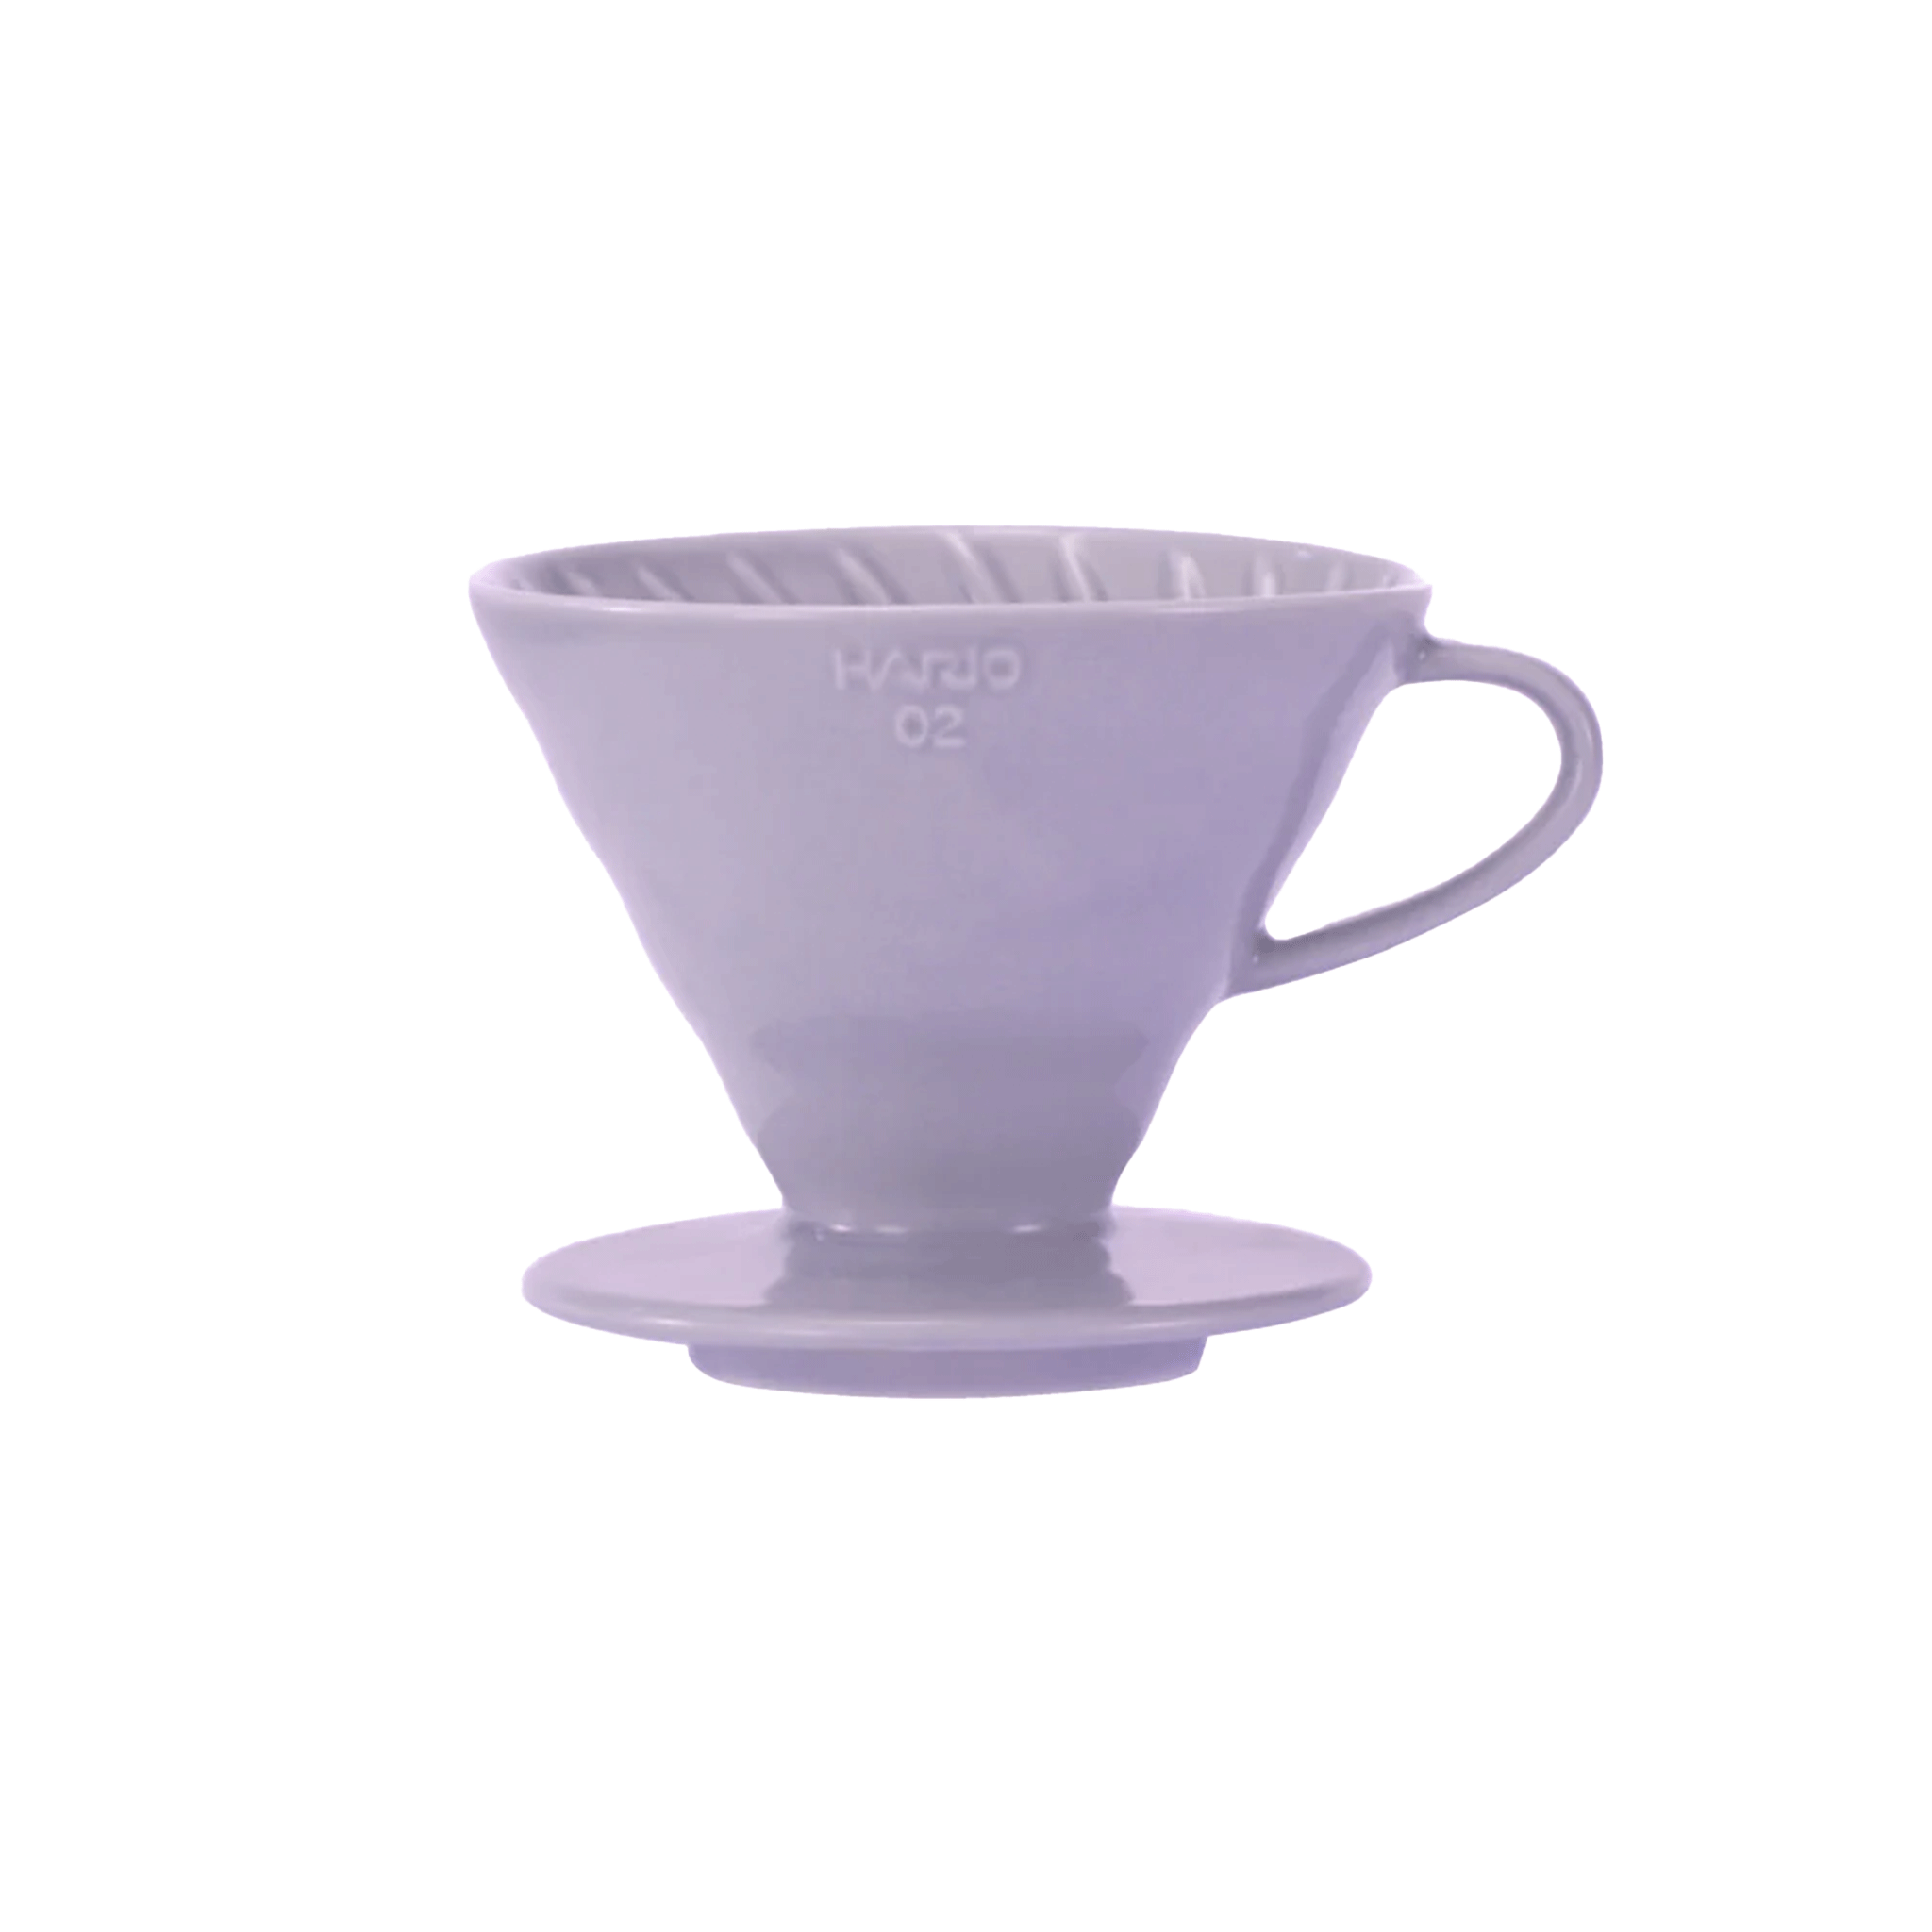 Hario V60 Ceramic Coffee Dripper - Size 02 - Rascal Coffee